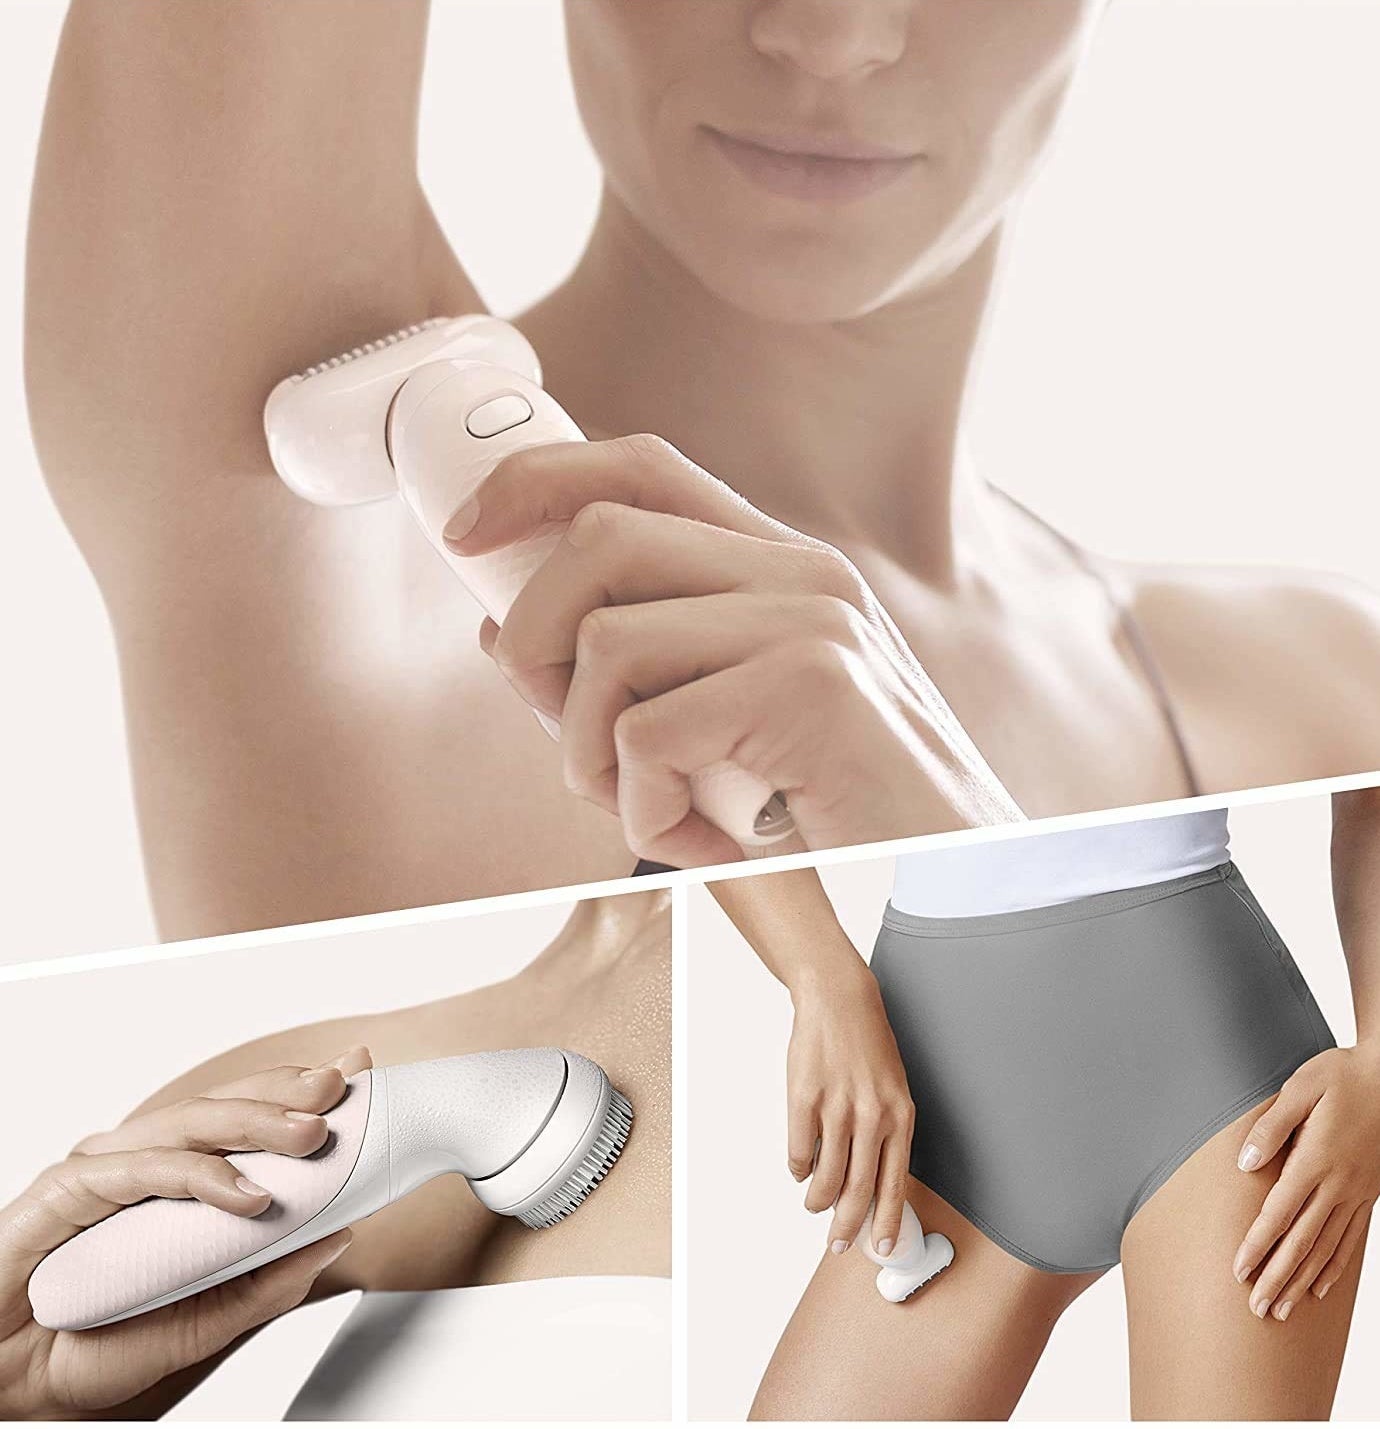 Model using handheld epilator of their armpits, chest, and bikini line